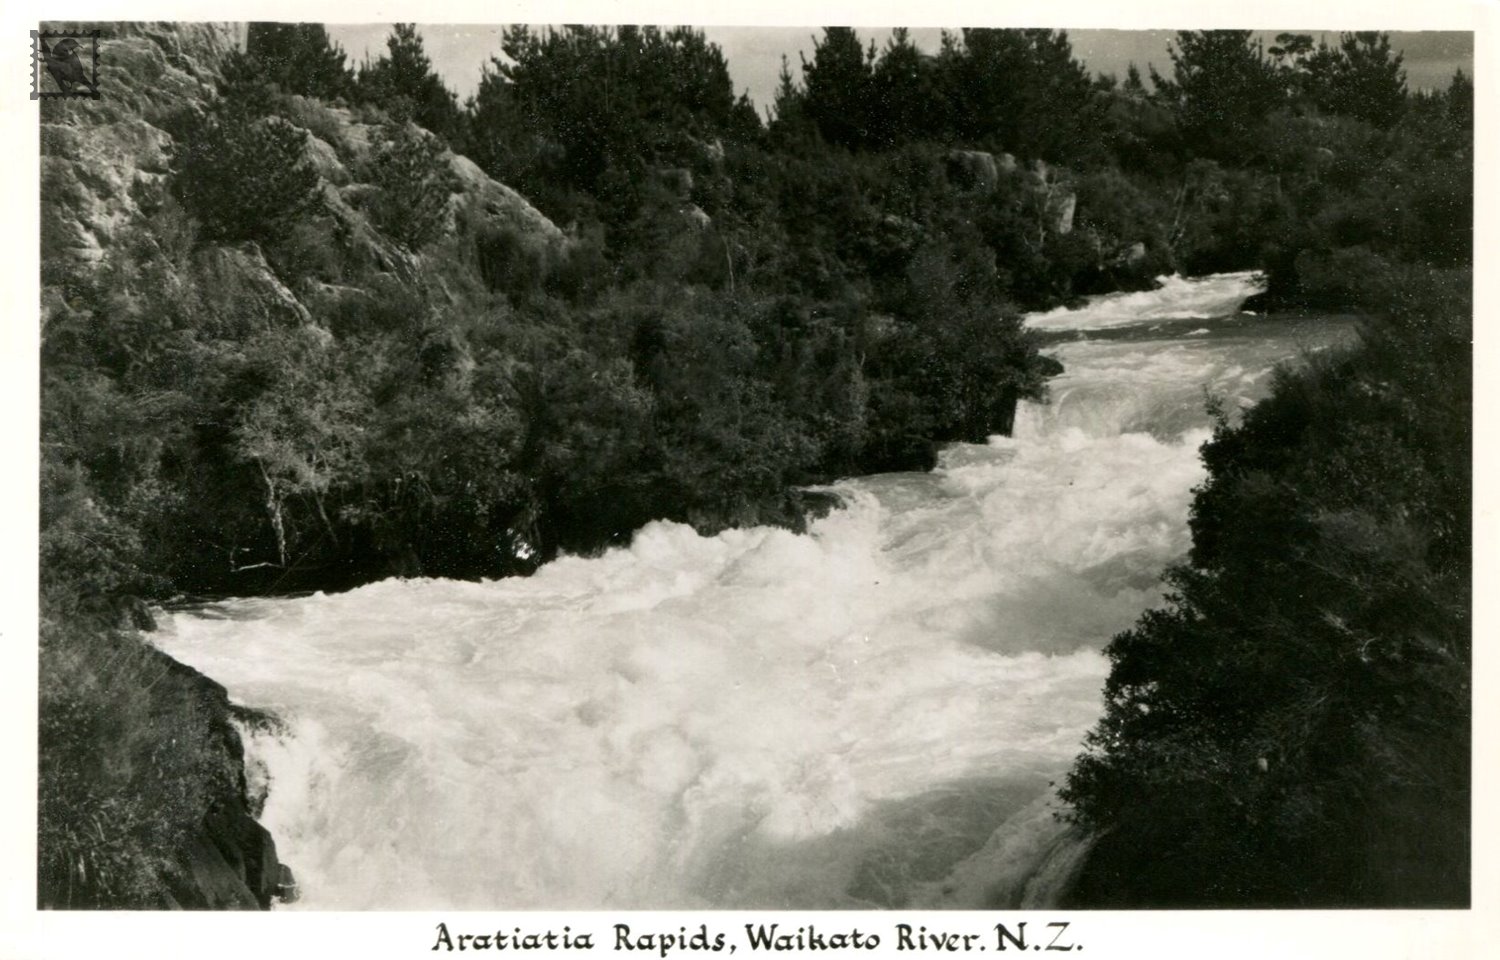 The Aratiatia Rapids Waikato River